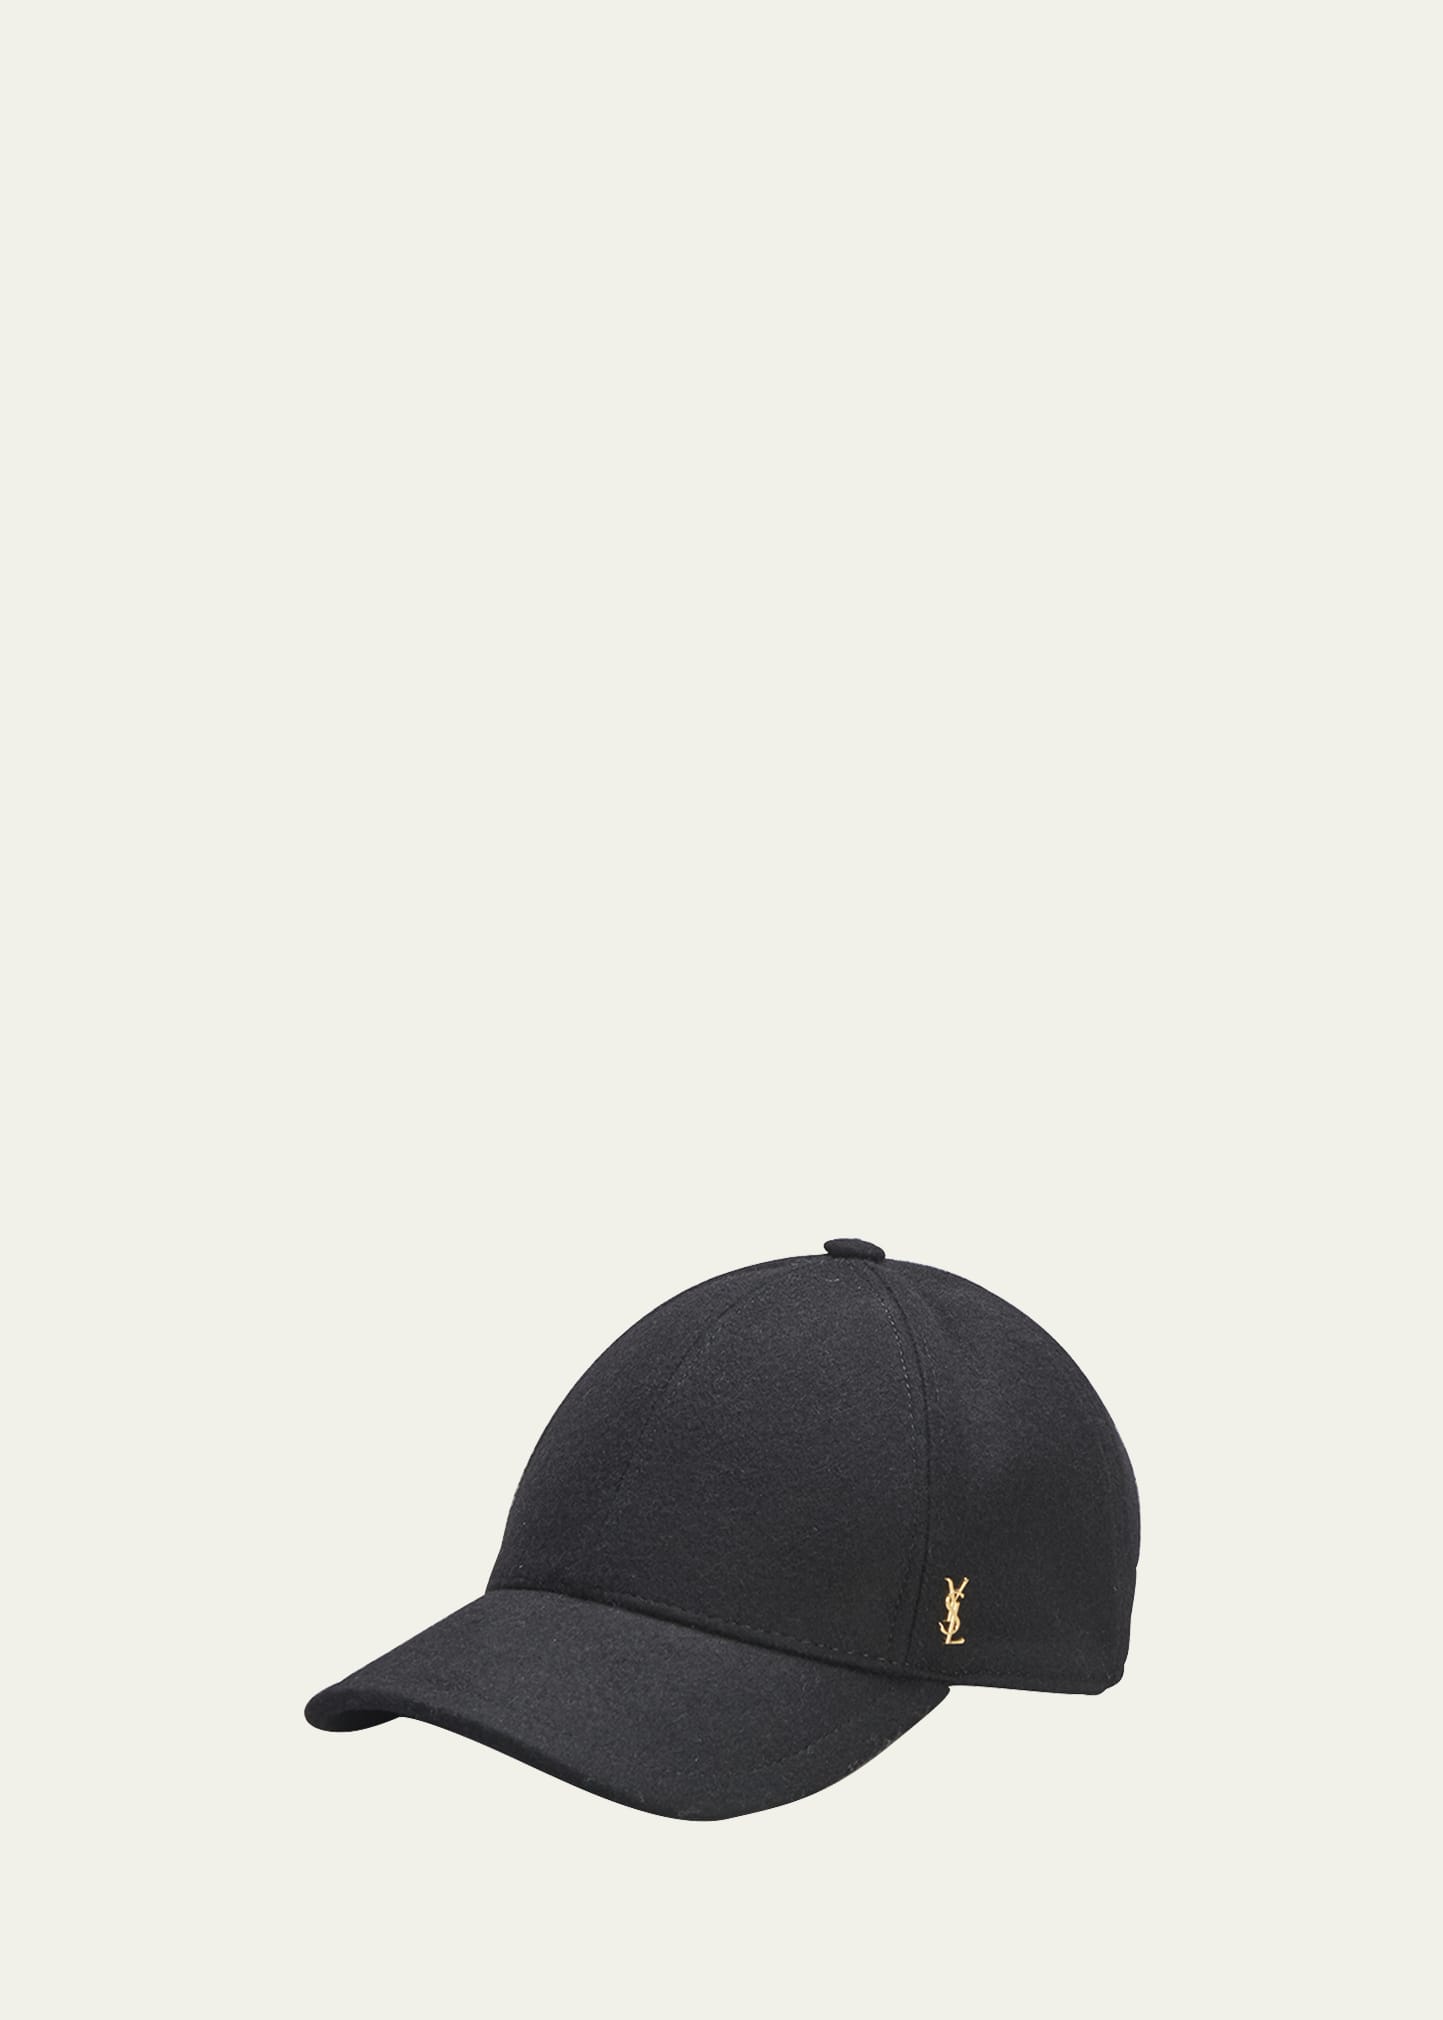 YSL Yves Saint Laurent 5 panel Leather Strap Back hat